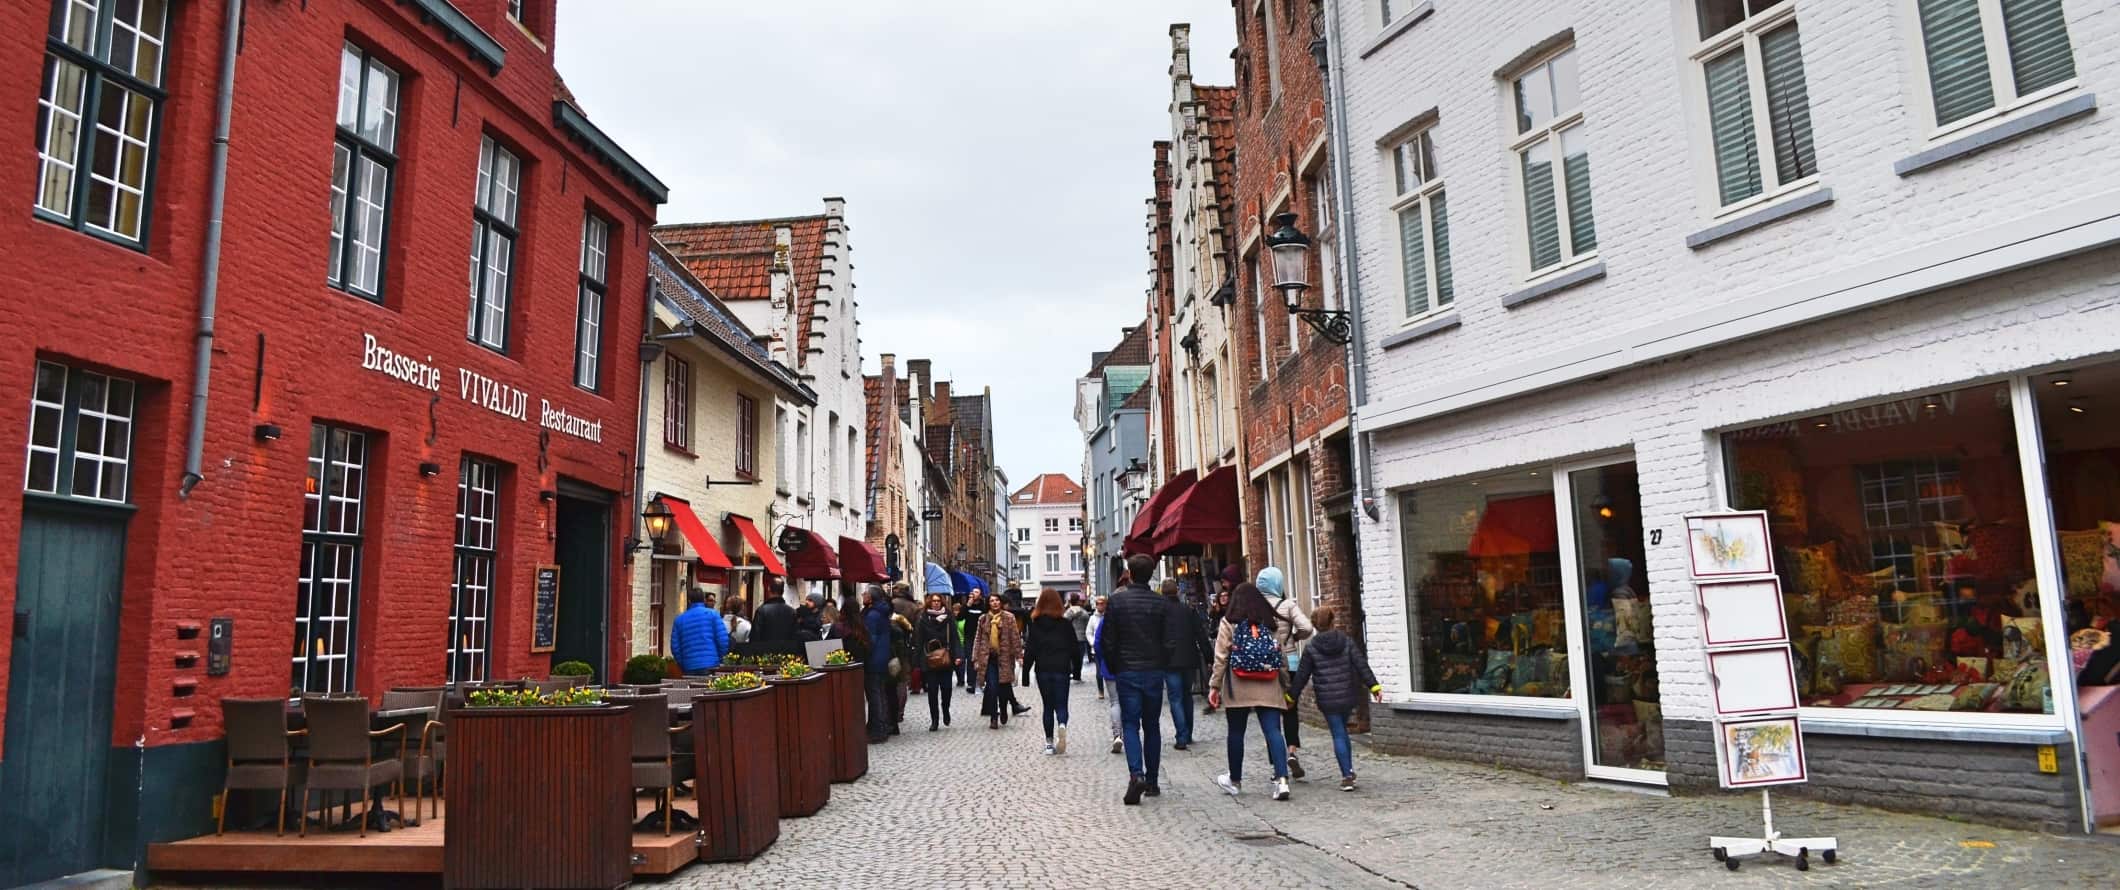 Cobblestone-street with people walking down it in Bruges, Belgium.